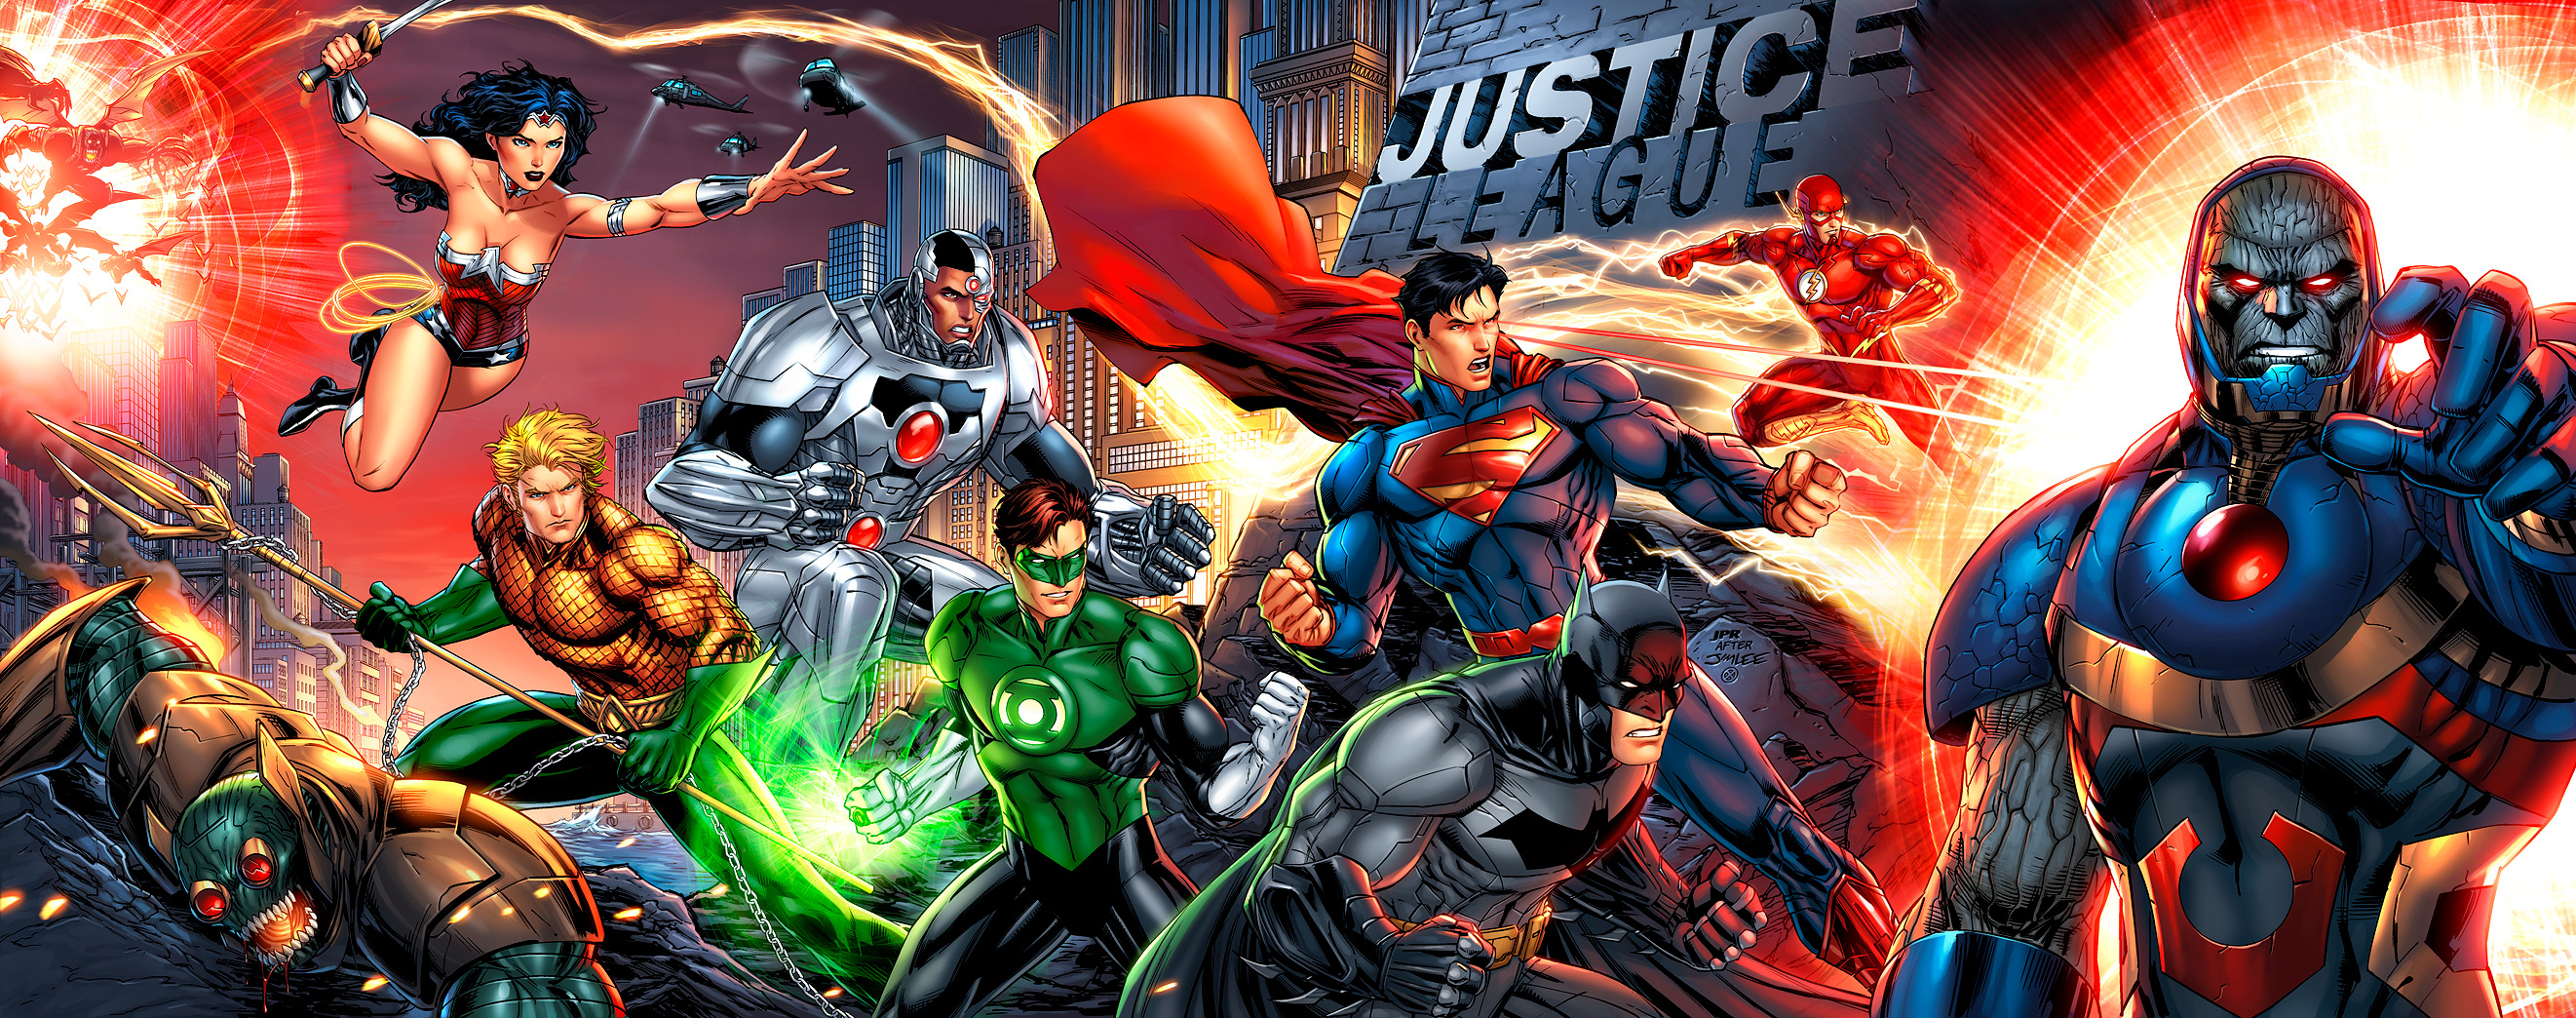 Thread Cool Jim Lee X Men Homage Via Justice League